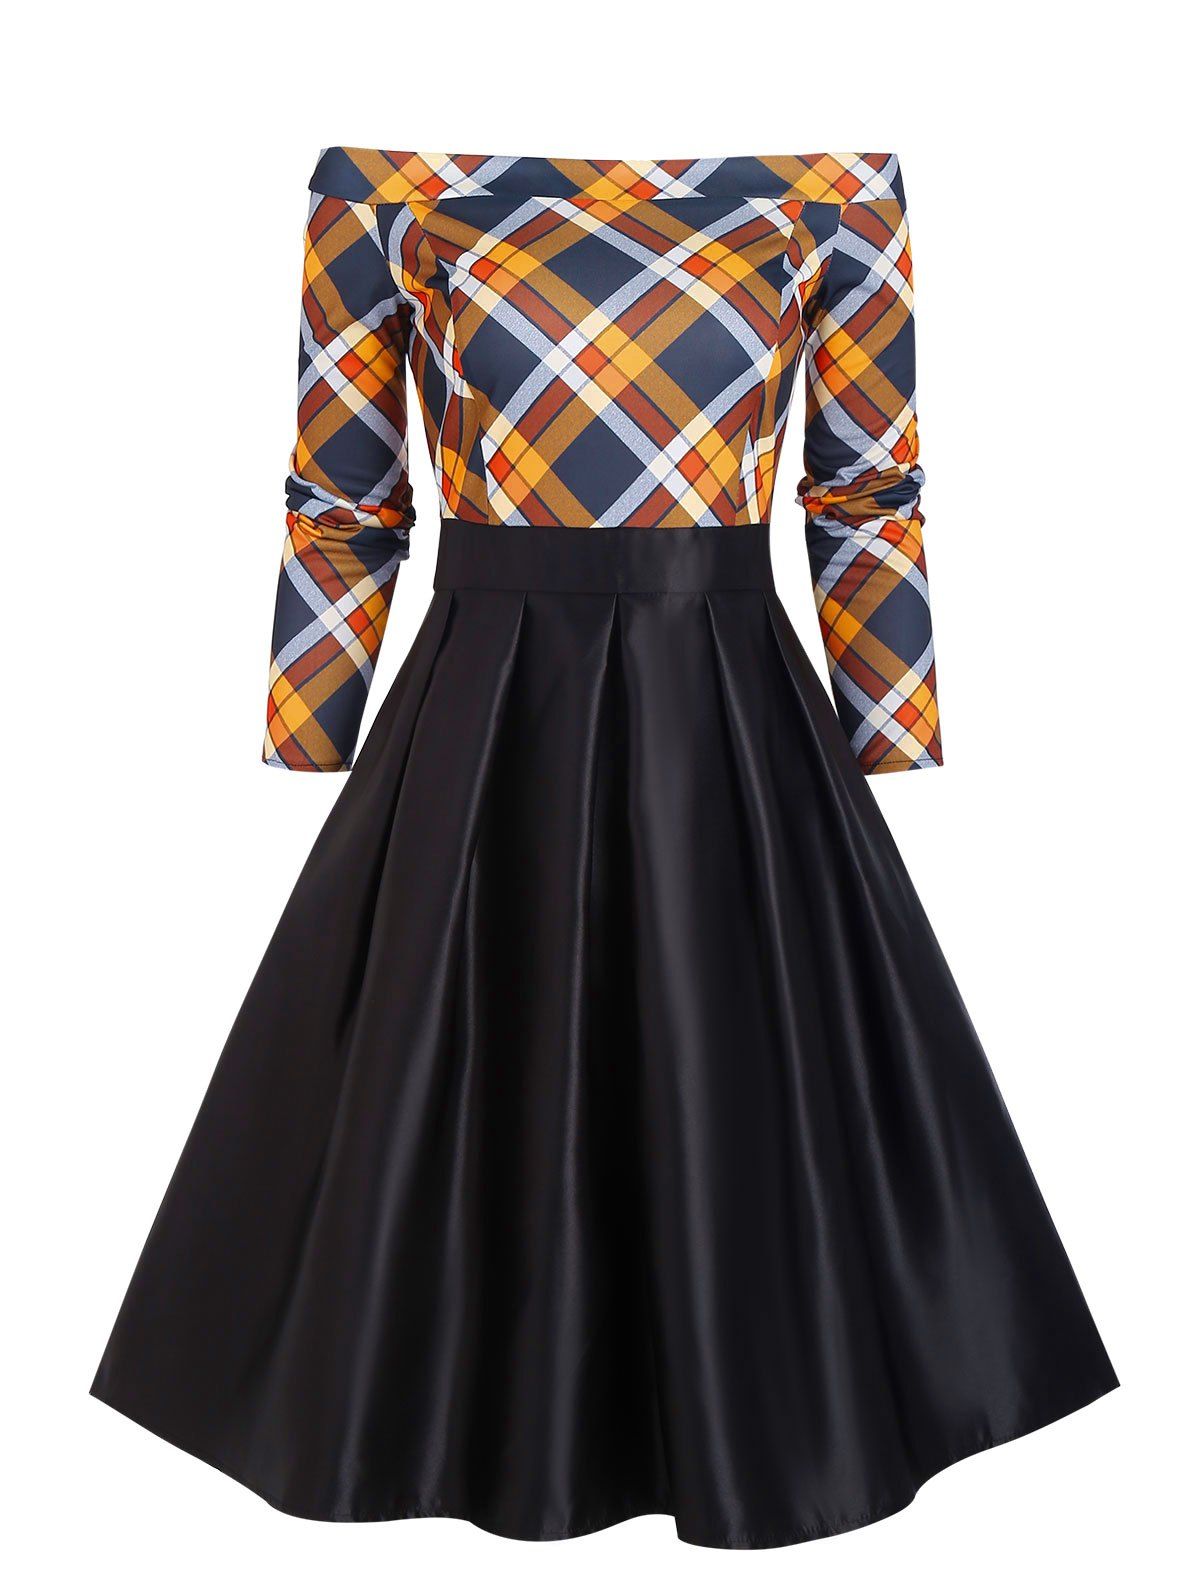 Plaid Print Vintage Dress Off The Shoulder Dress Long Sleeve Pleated Detail A Line Dress - YELLOW L